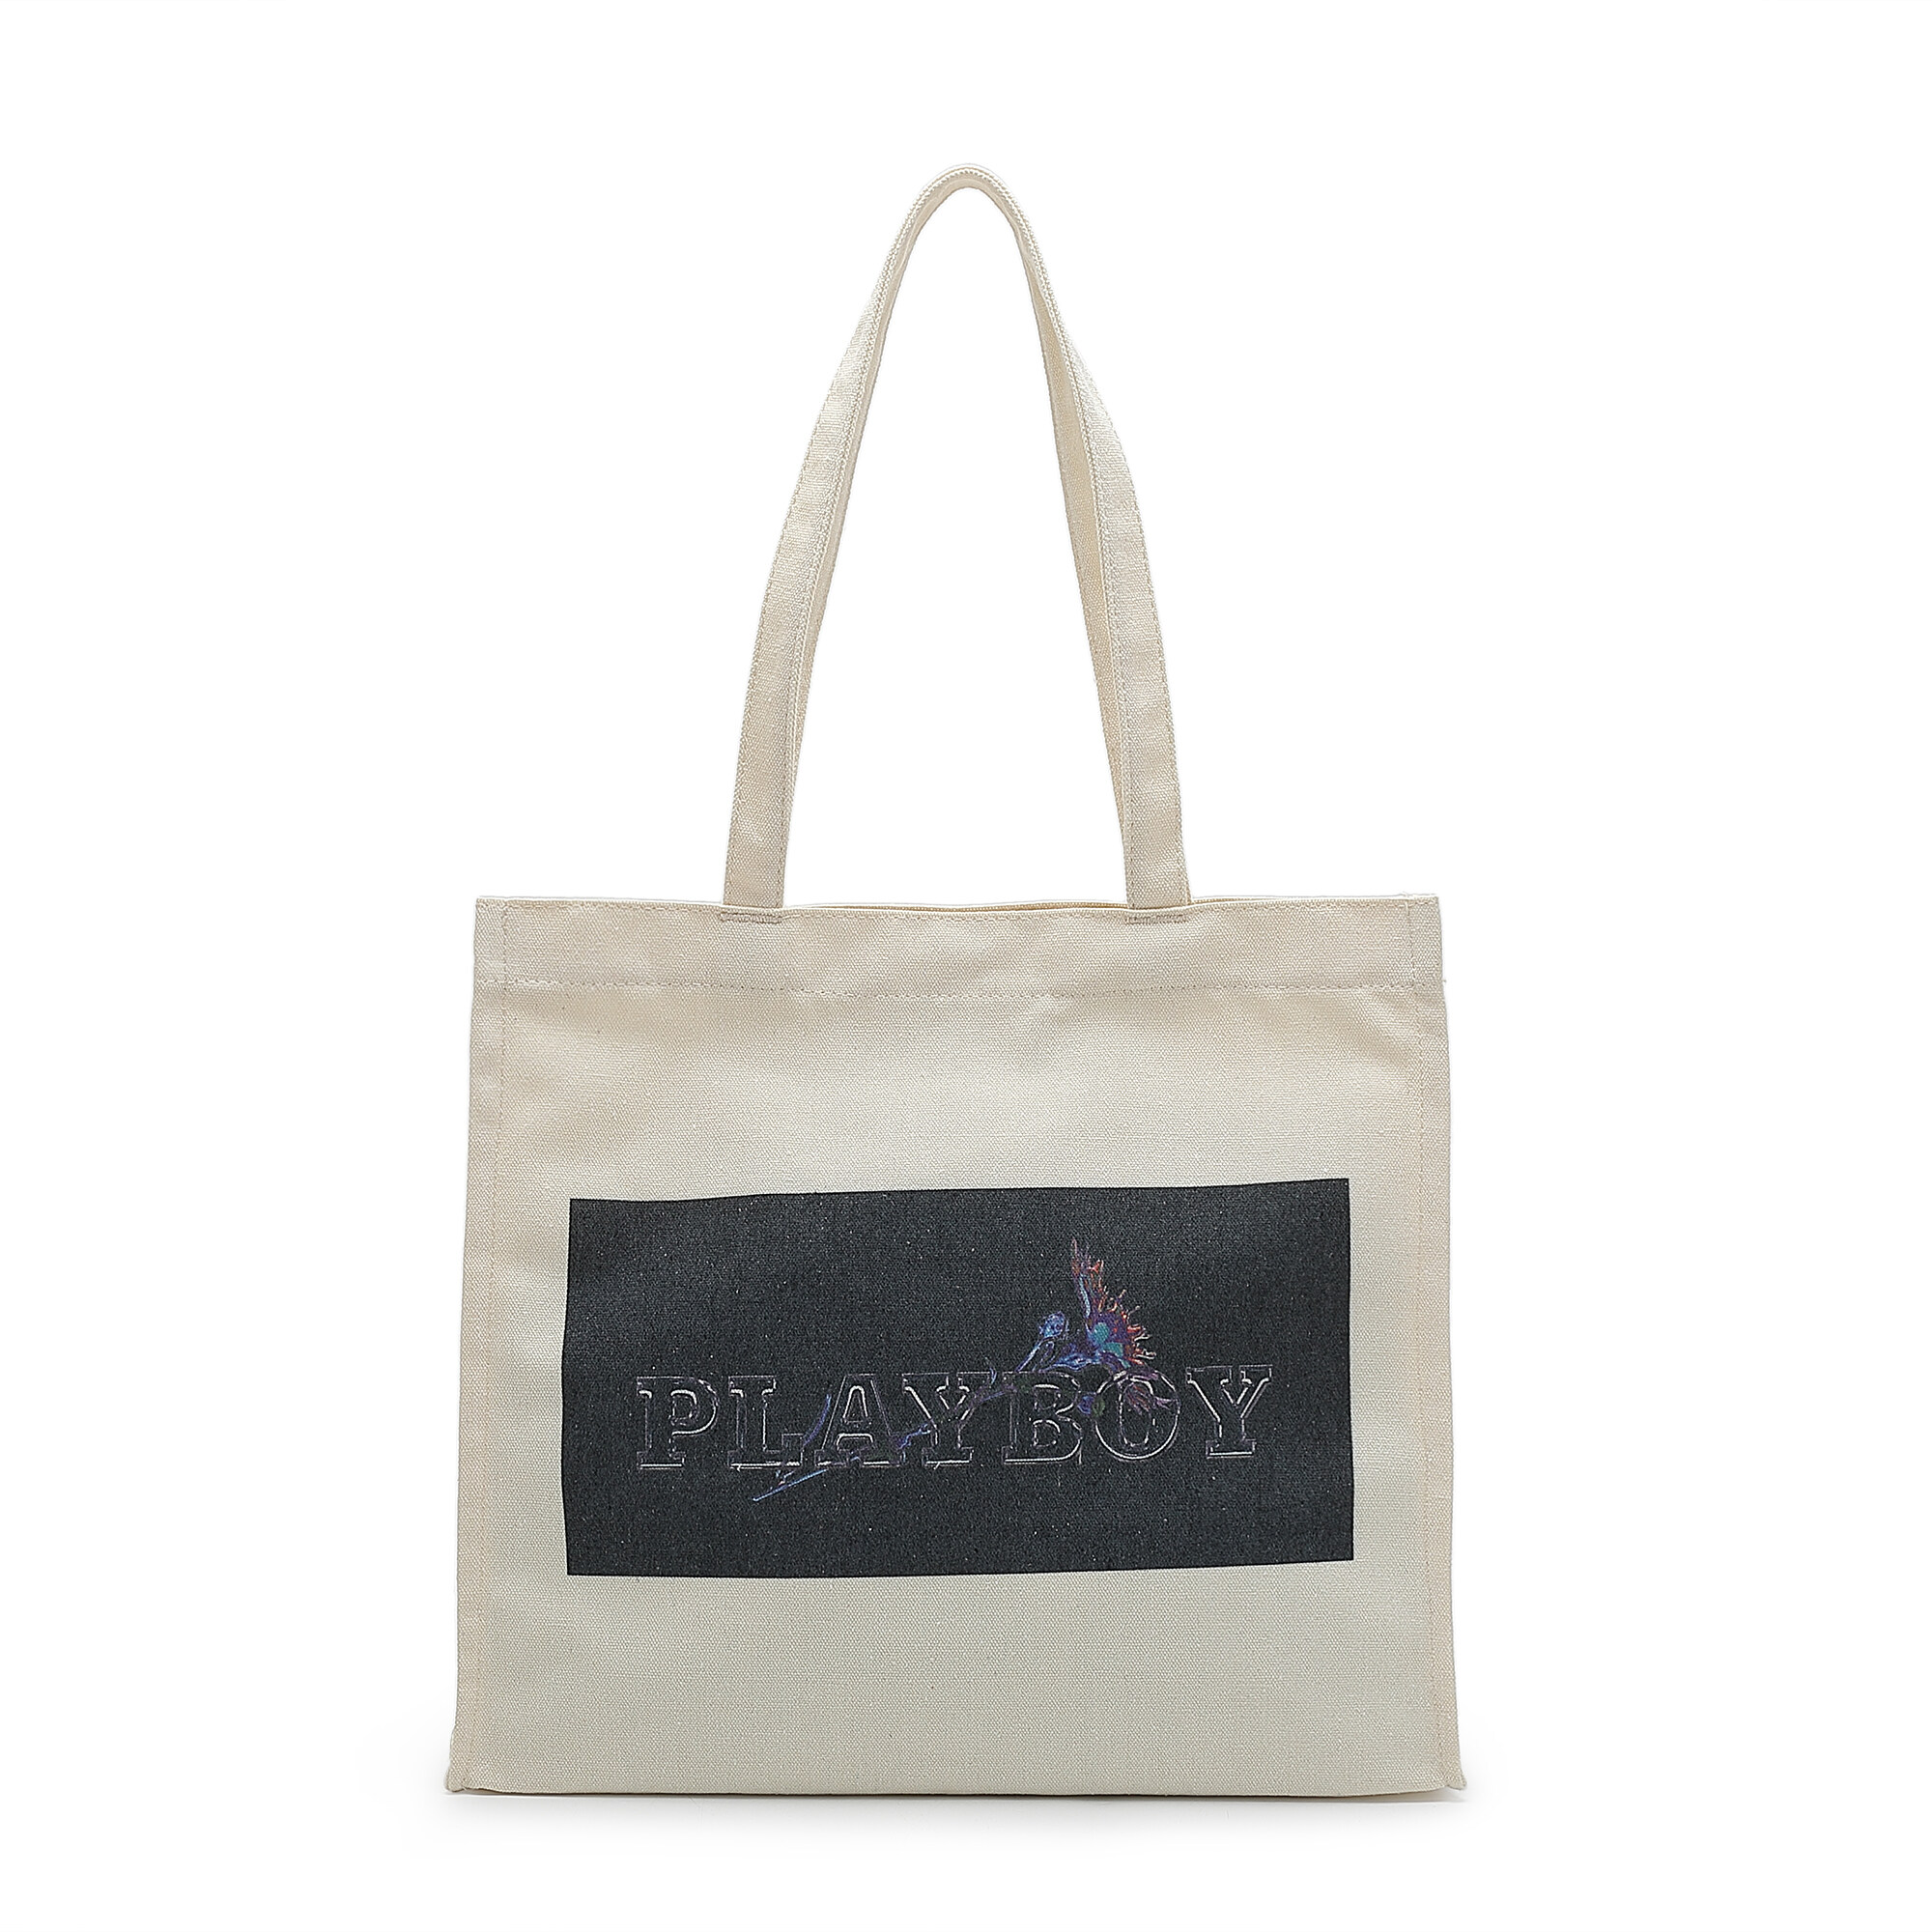 Playboy Ladies Canvas Tote Bag / Shoulder Bag BXB 3047 Multi Designs